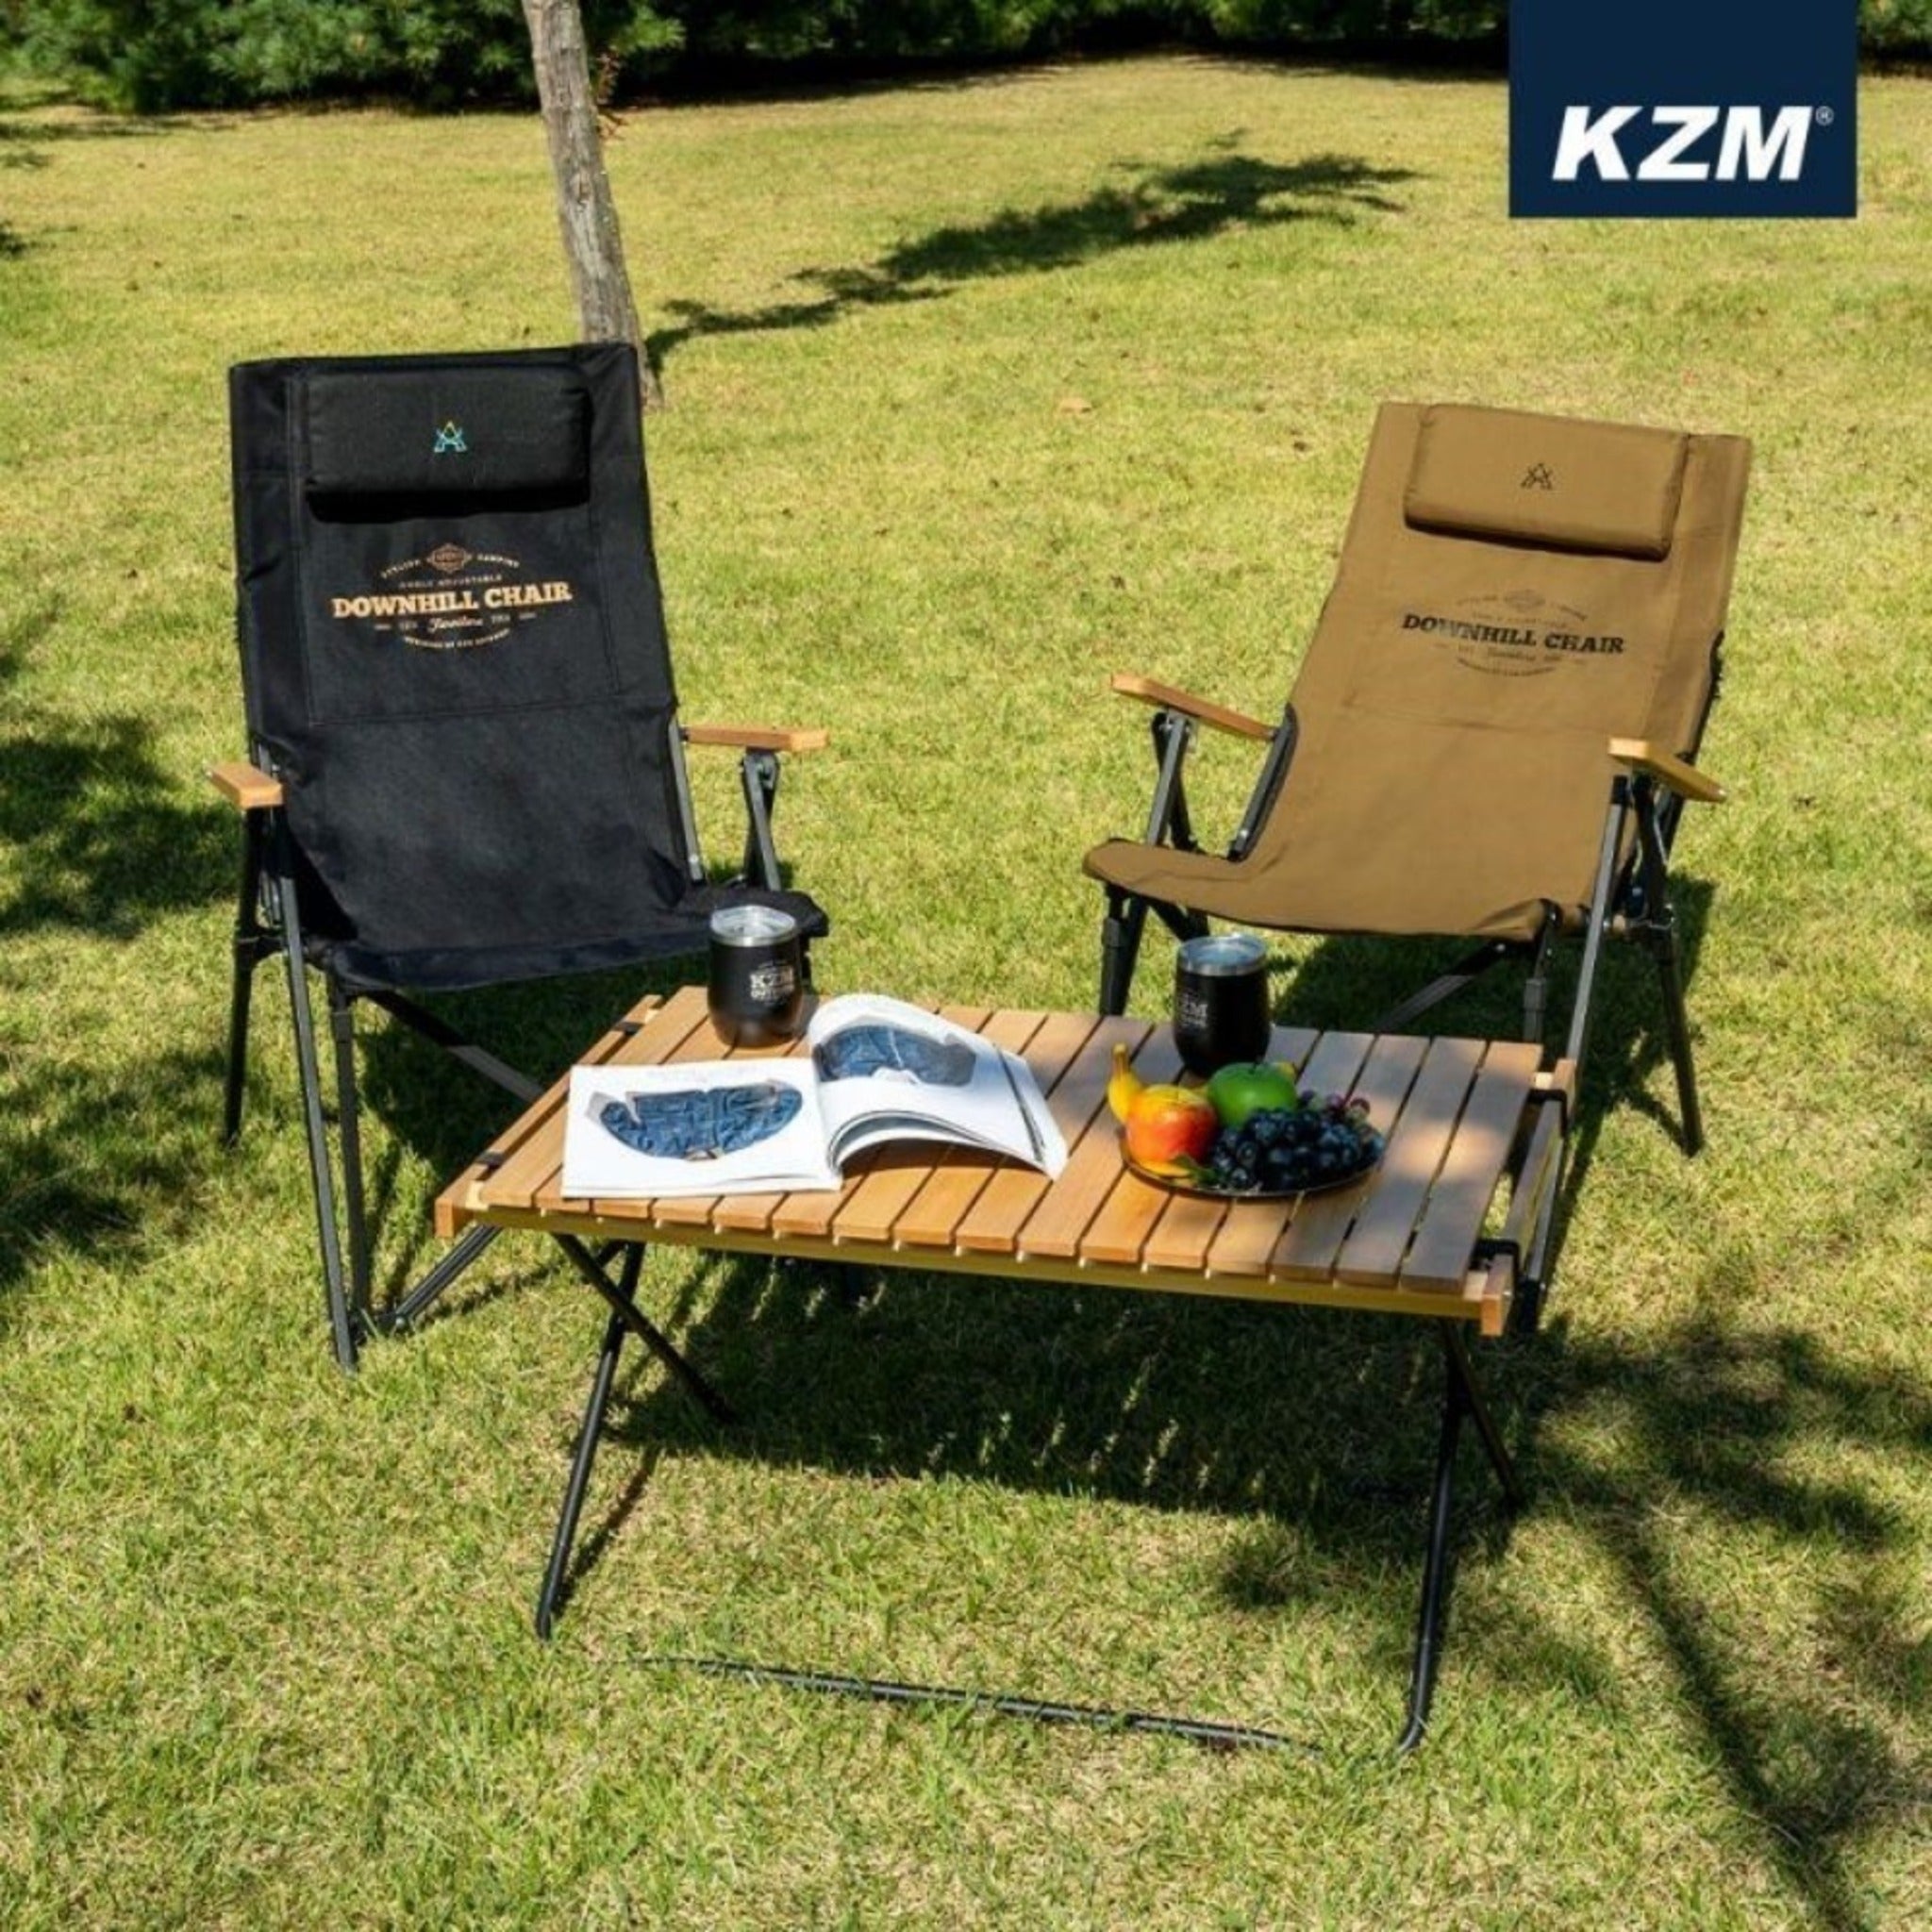 【KZM】KAZMI 素面木手把四段可調折疊椅 黑色 K20T1C32